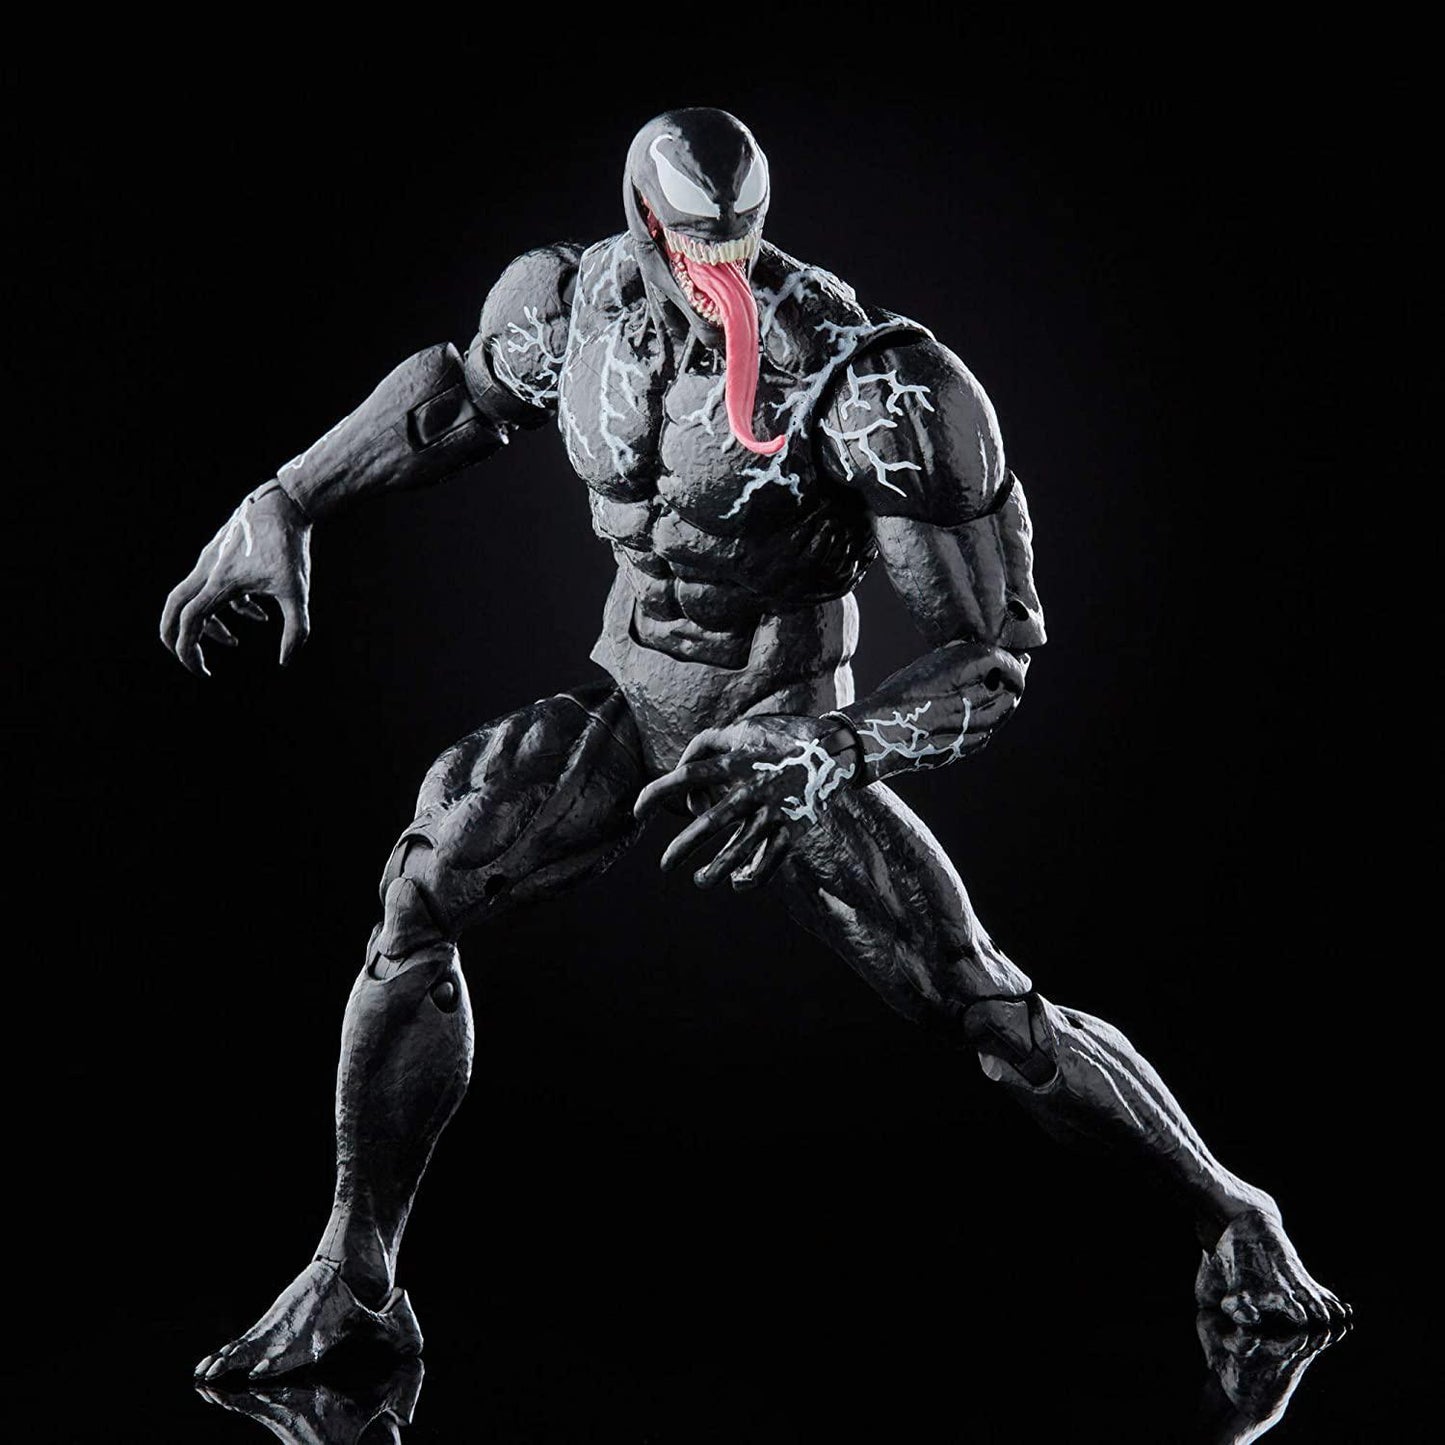 Hasbro Marvel Legends Series Venom 6-inch Collectible Action Figure Venom Toy, Premium Design and 3 Accessories